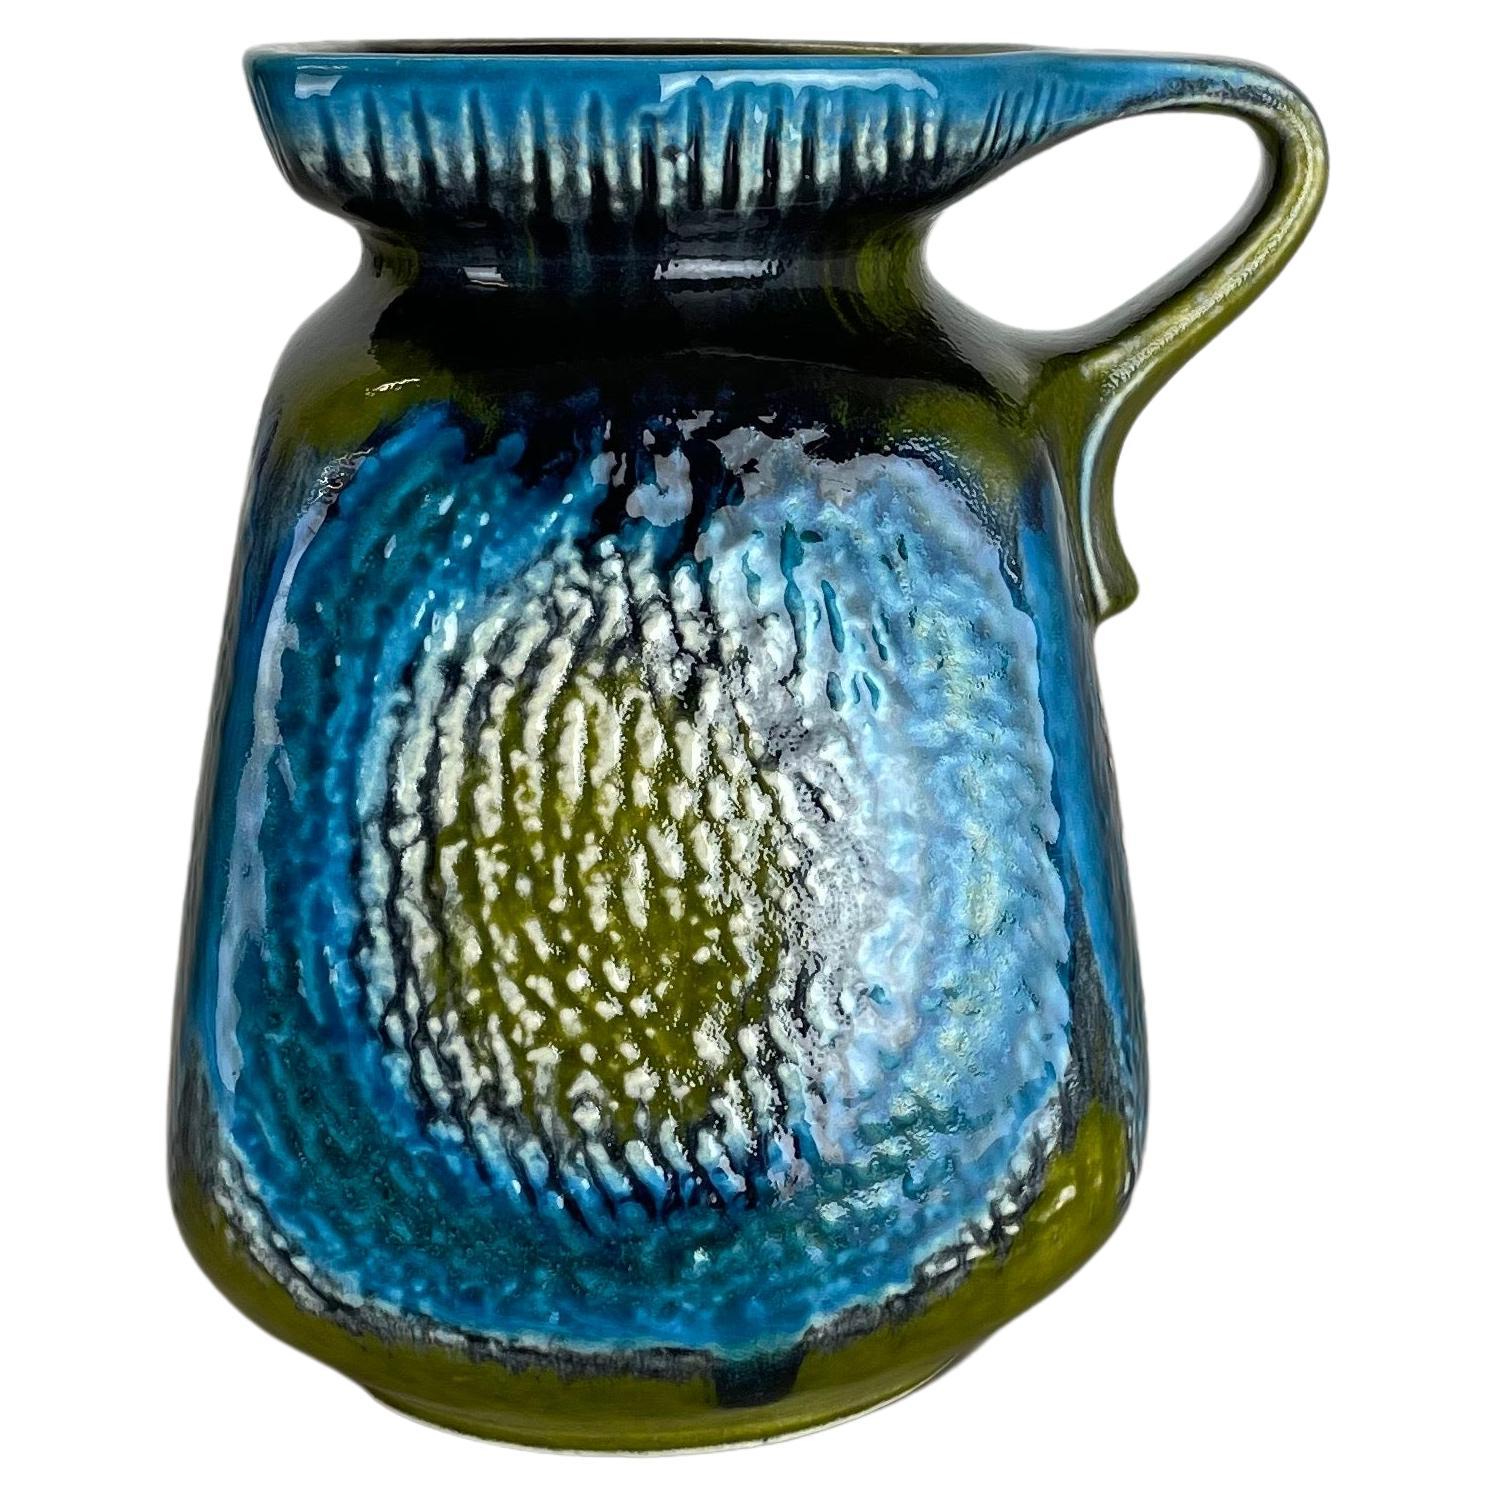 Bunte Fat Lava-Keramik „Grün und Blau“ Vase Jasba Keramik, Deutschland, 1970er Jahre